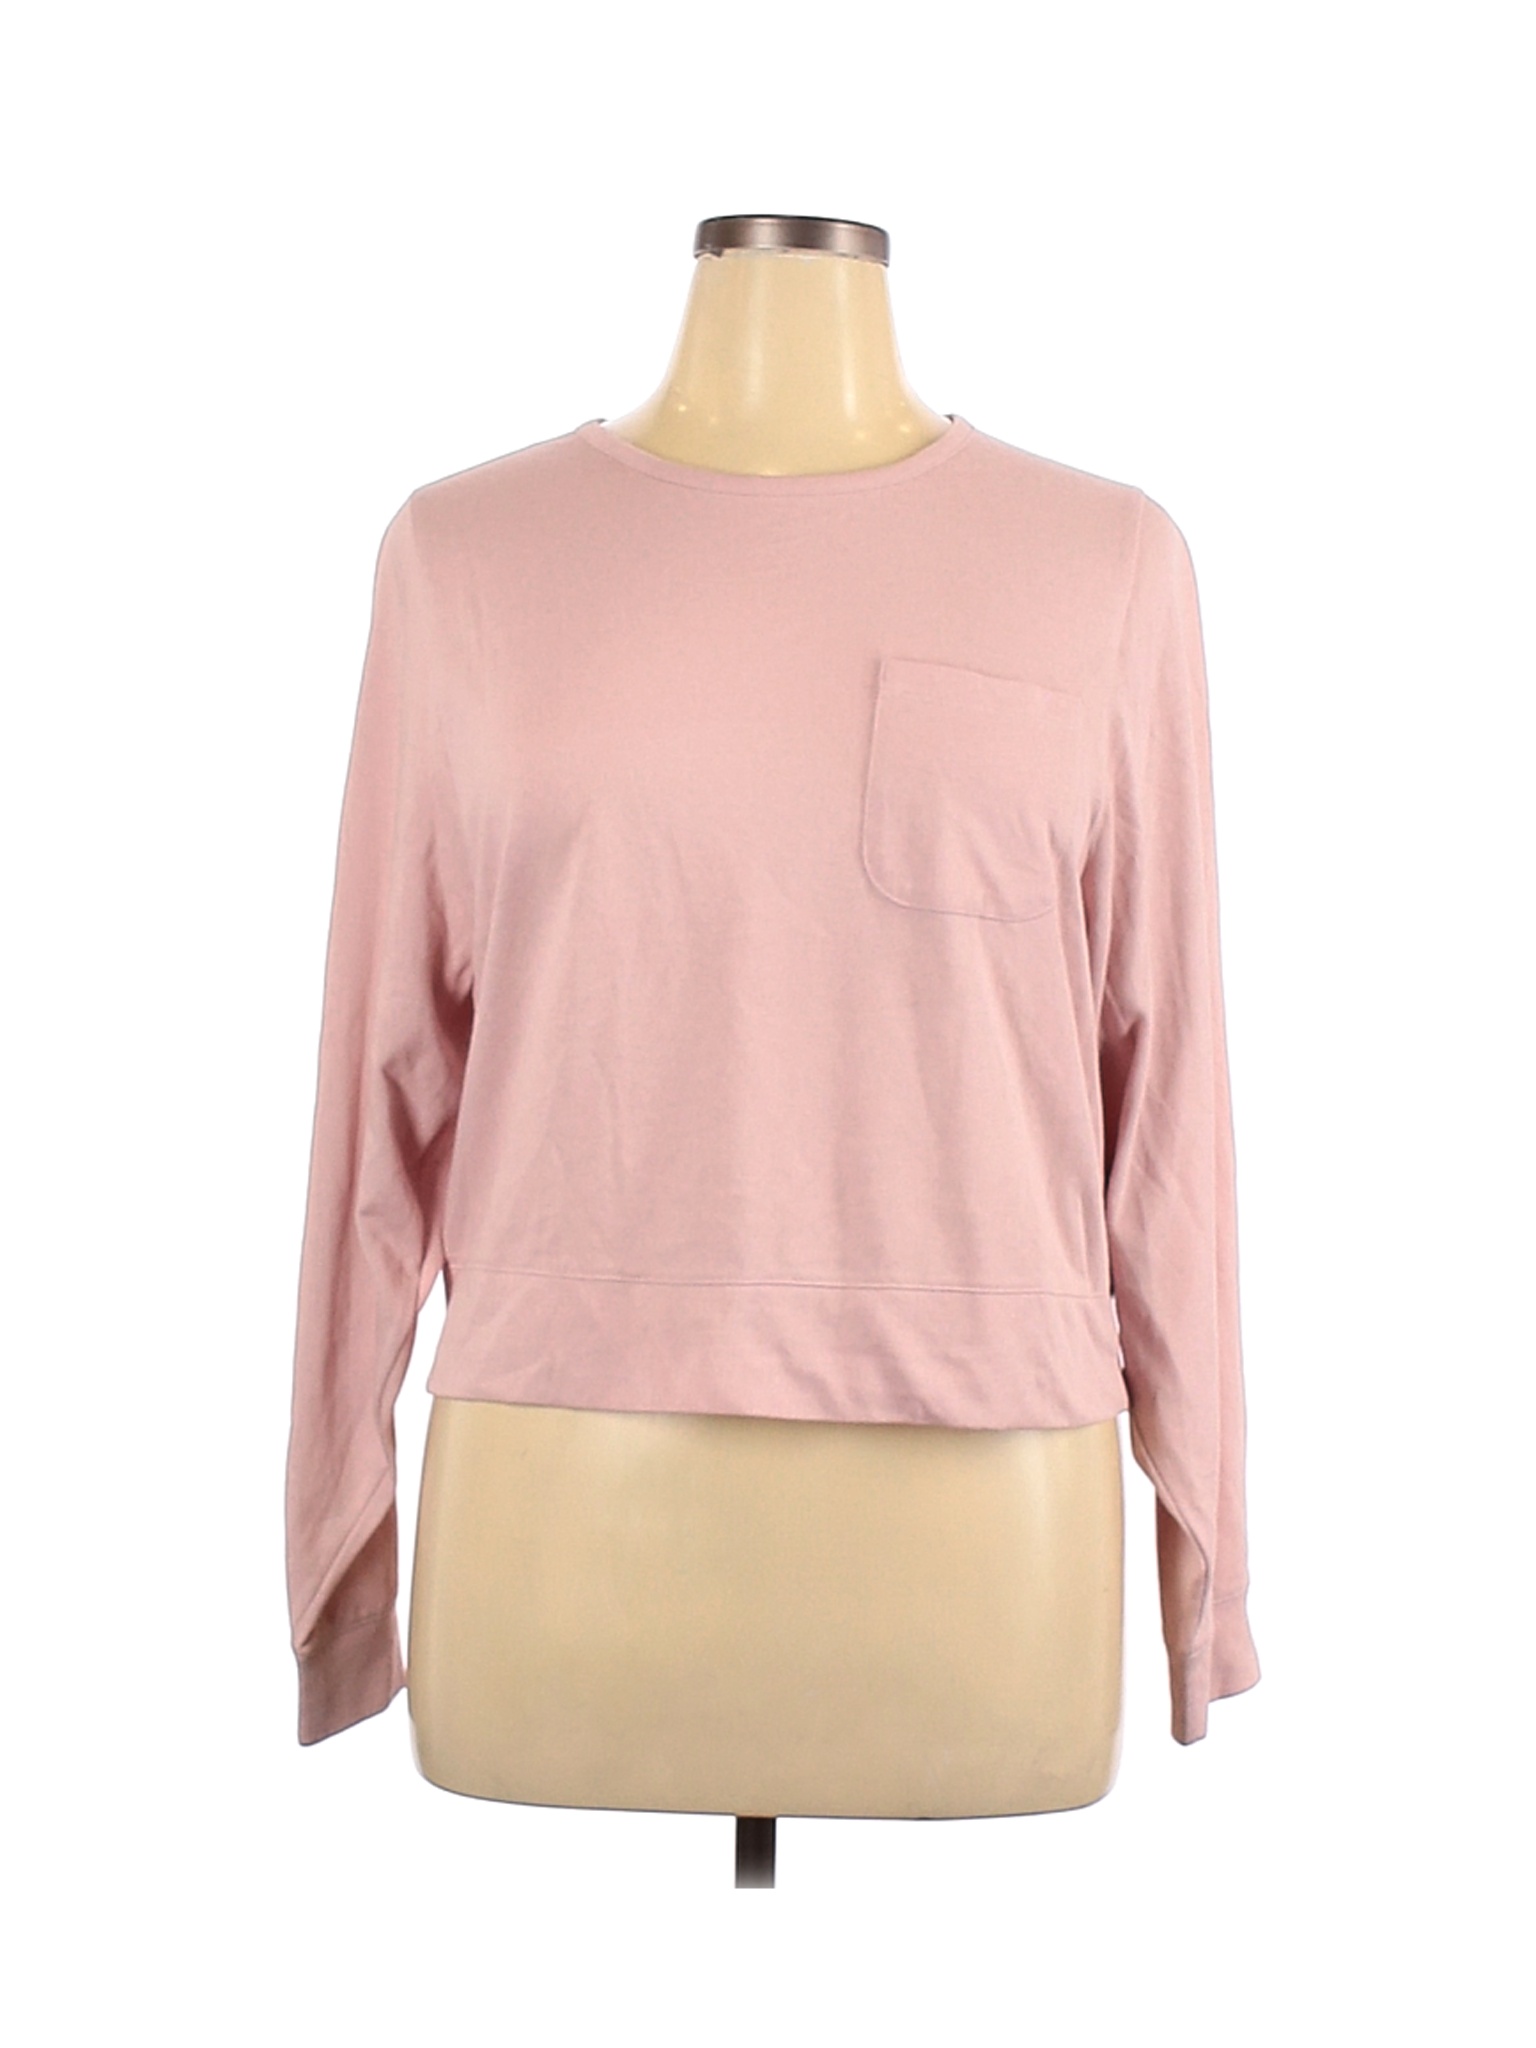 NWT Madewell Women Pink Pullover Sweater XL | eBay